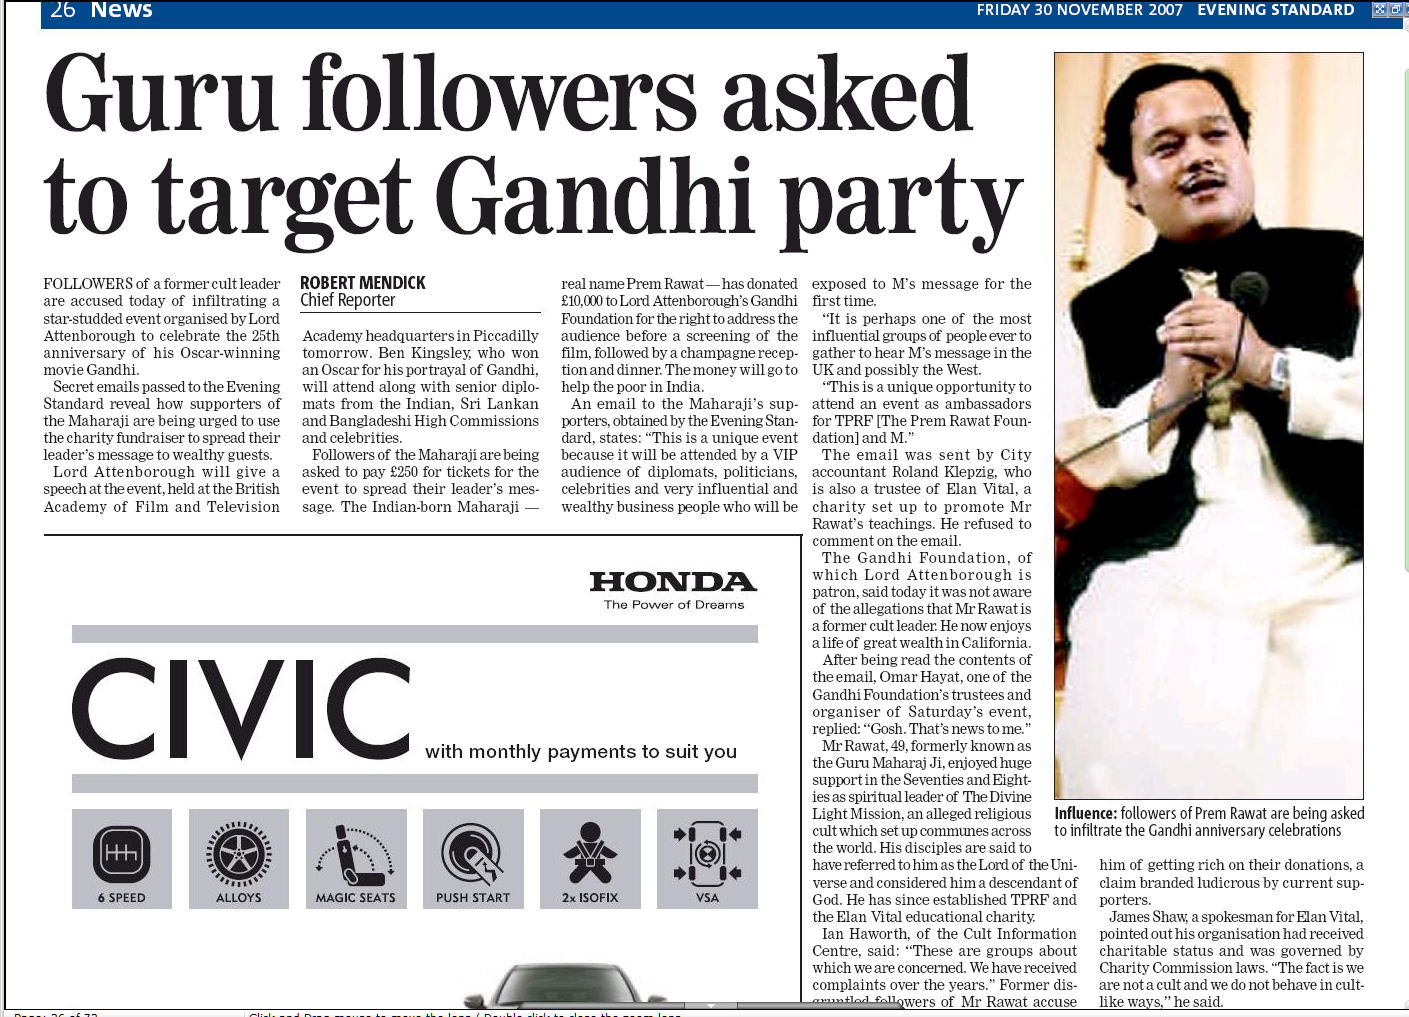 Prem Rawat (Maharaji), Evening Standard Article regarding Gandhi Foundation.